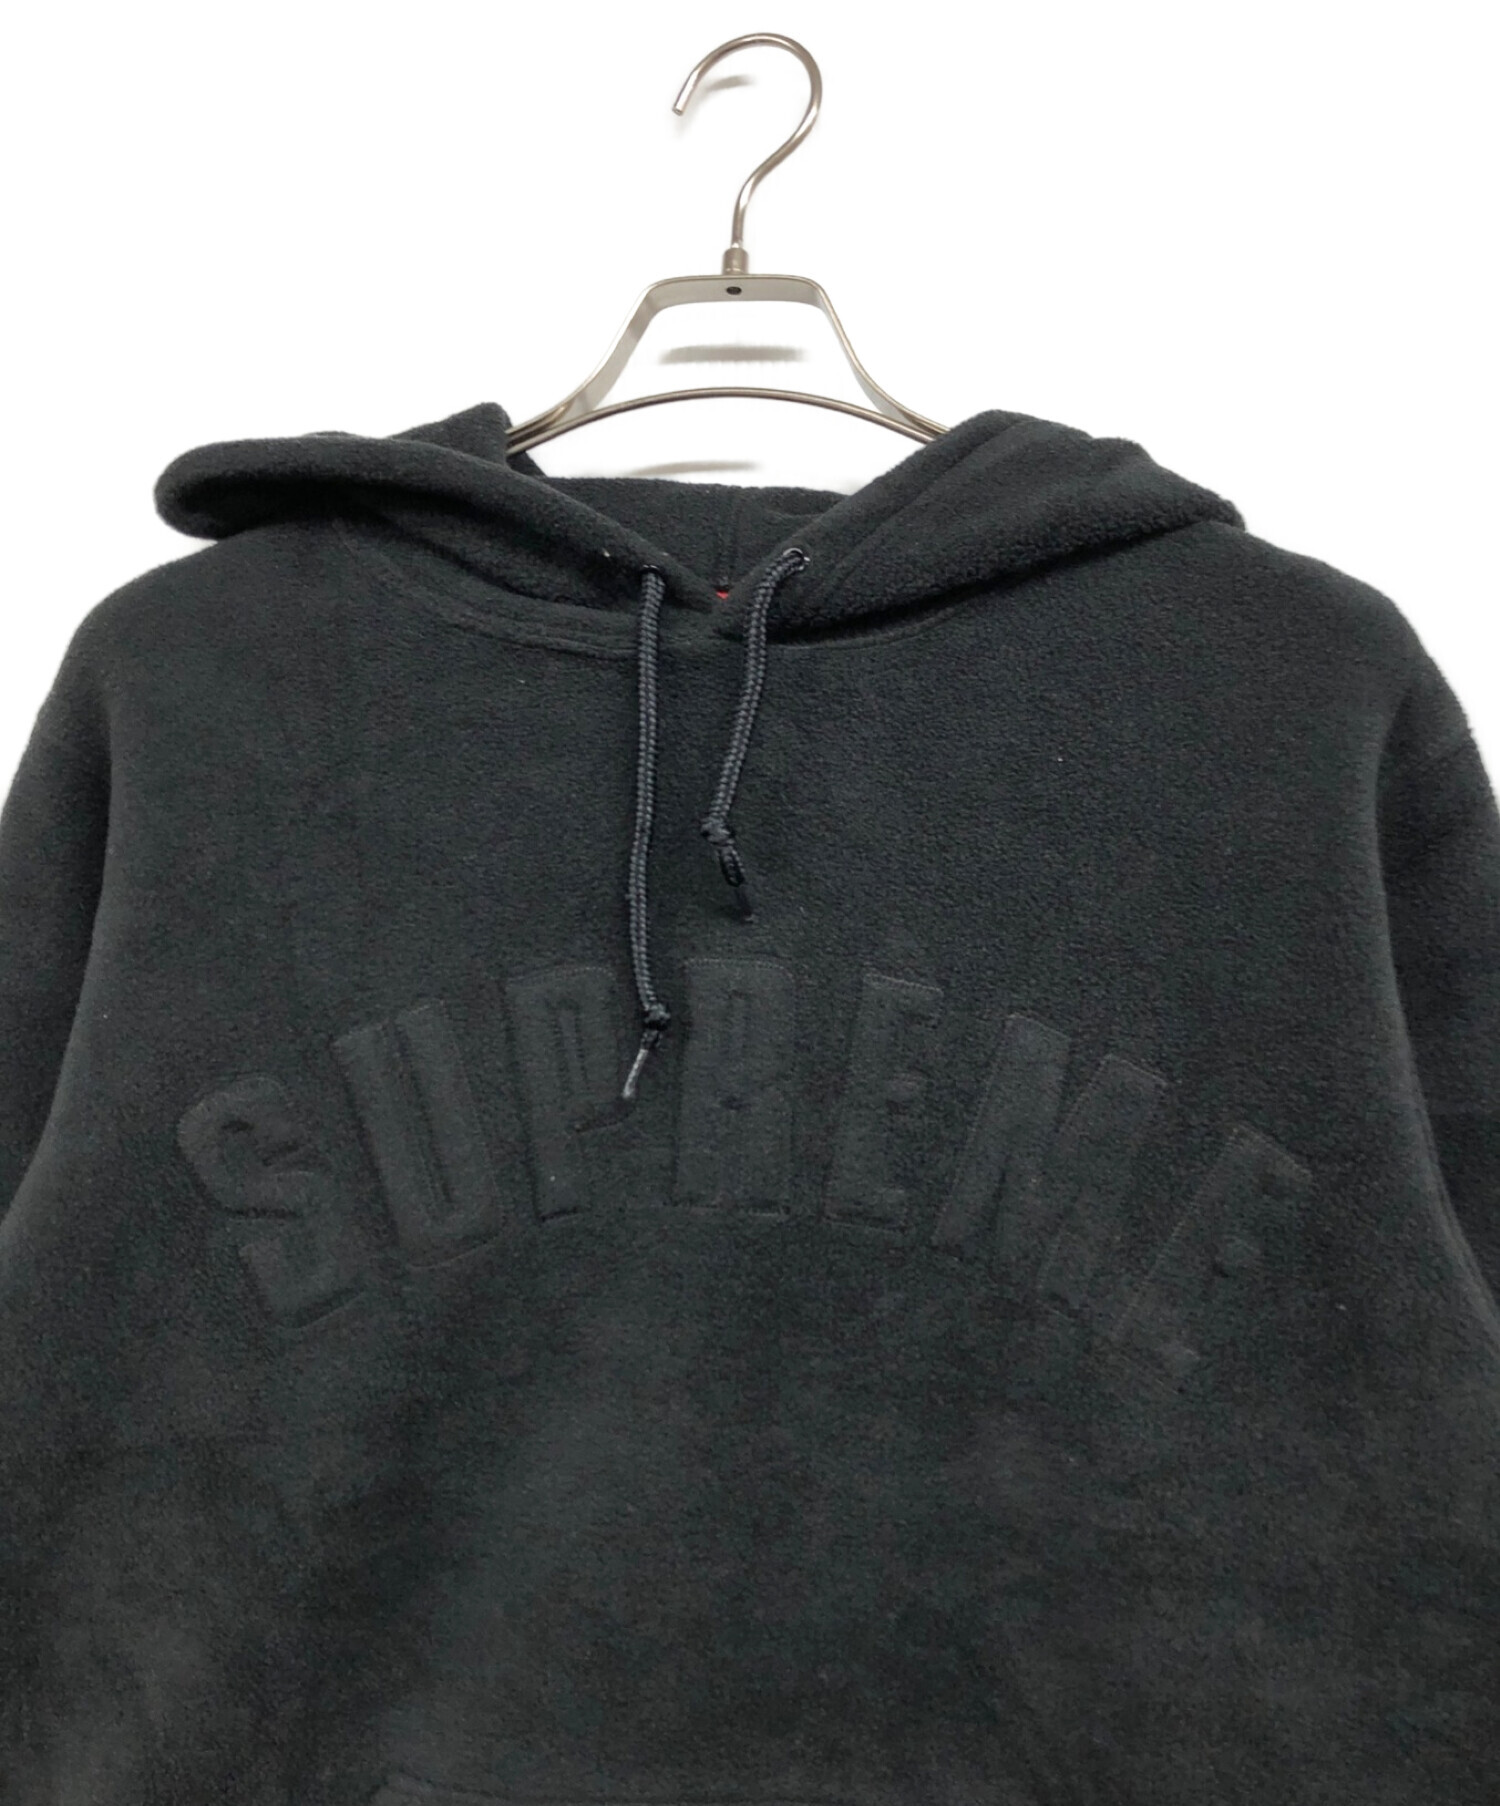 Supreme (シュプリーム) Polartec Hooded sweatshirt ブラック サイズ:Ⅿ